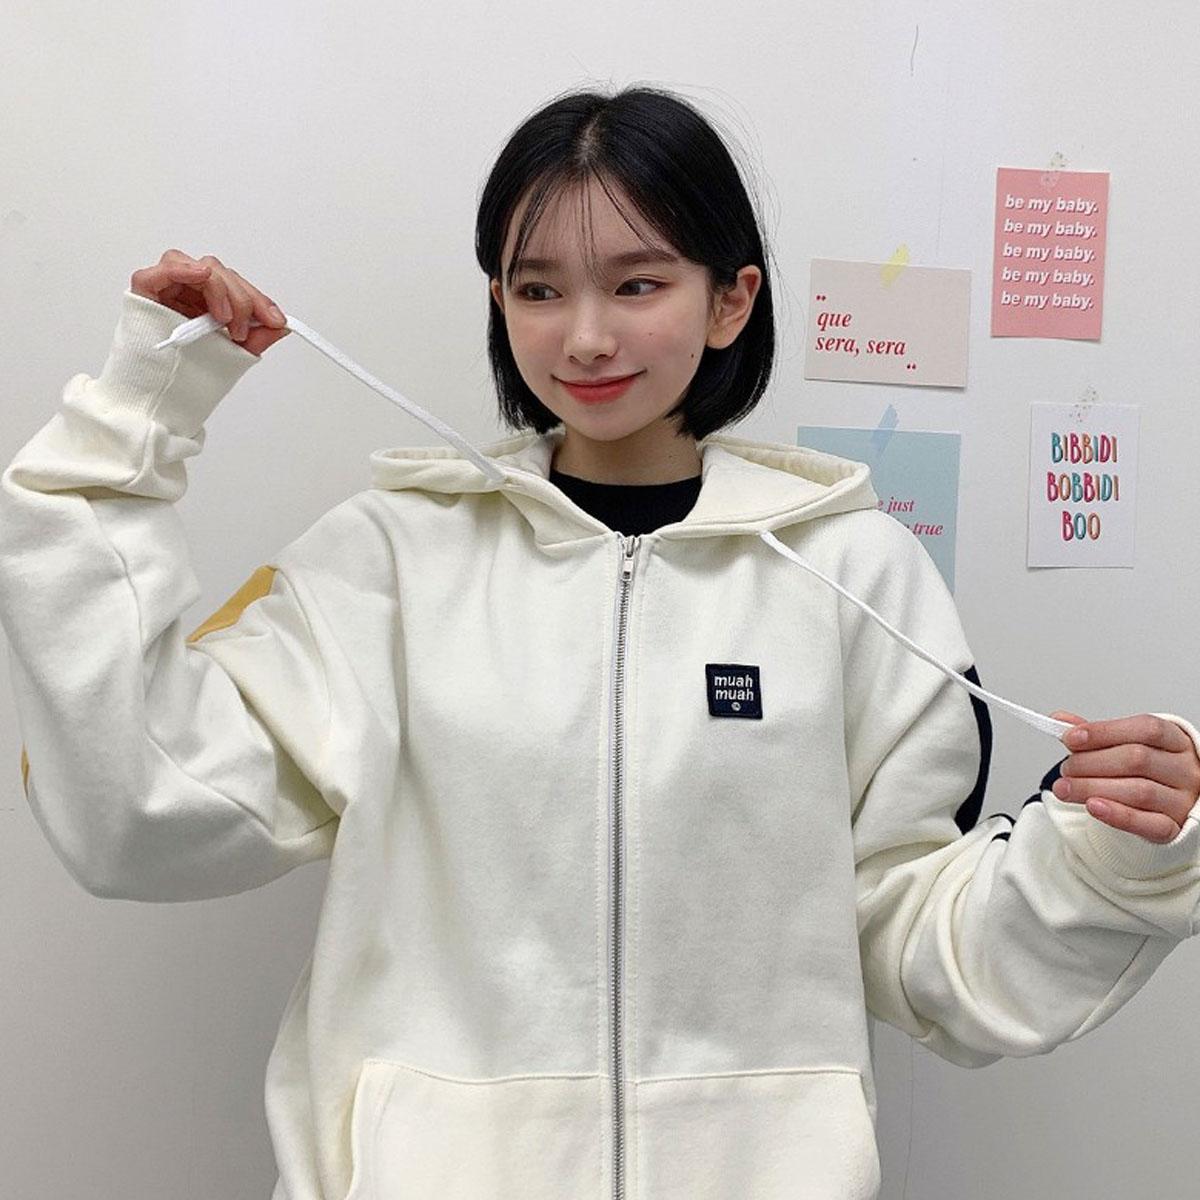 korean brand muah muah signature combi hood zip in in cream fully zipped worn by model 